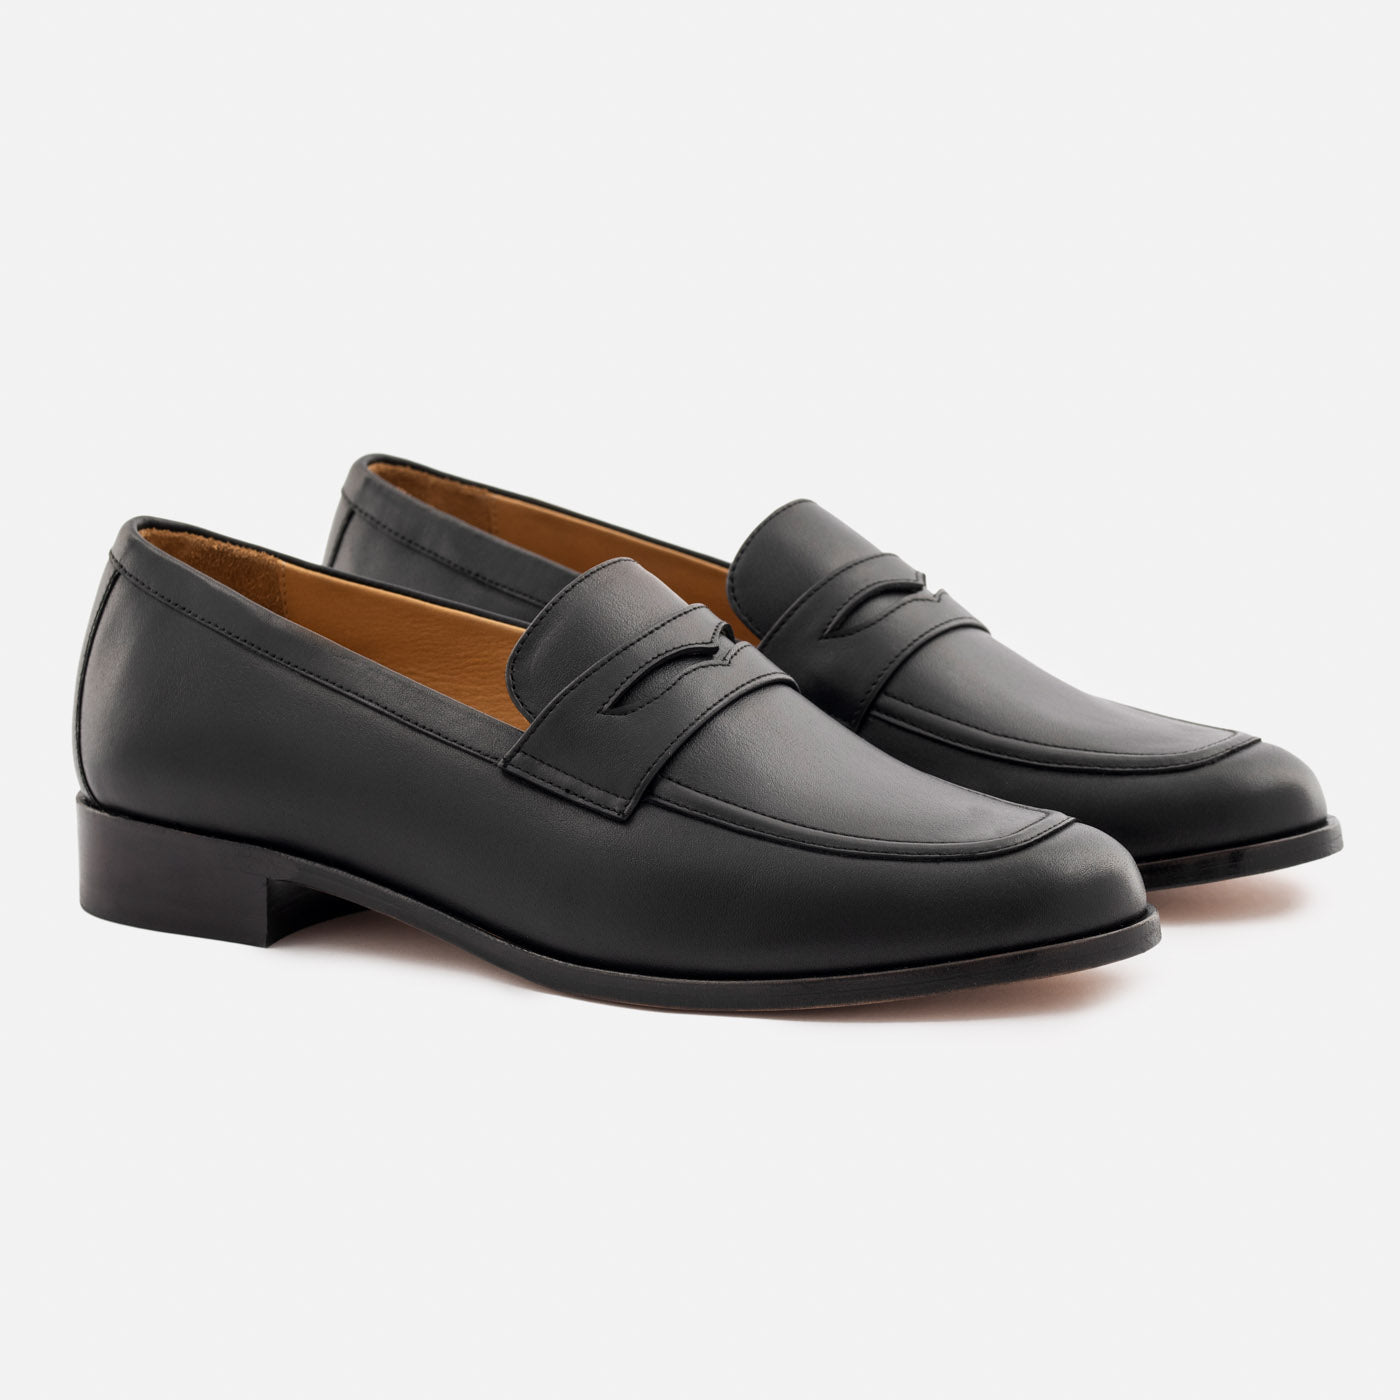 Beckett Simonon Siena Loafers | Black | Size 7.5 | Men's Casual Shoe